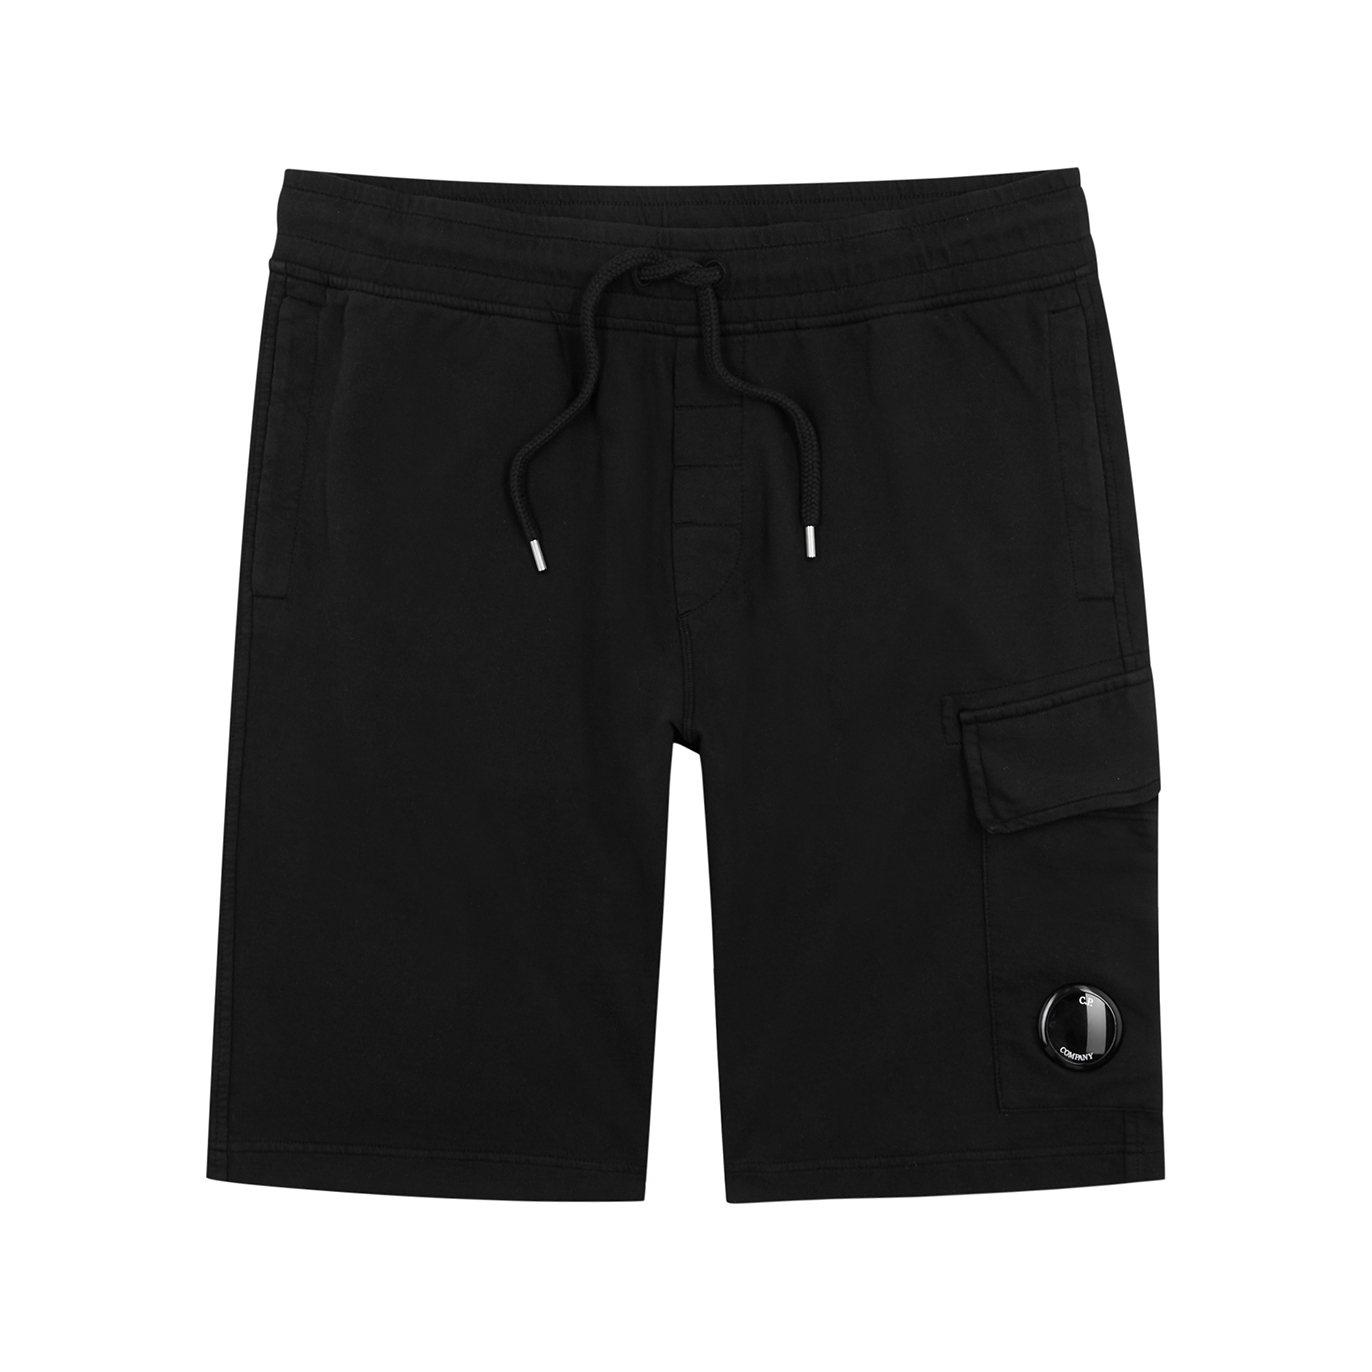 C.P. Company Black Cotton Shorts - Xl